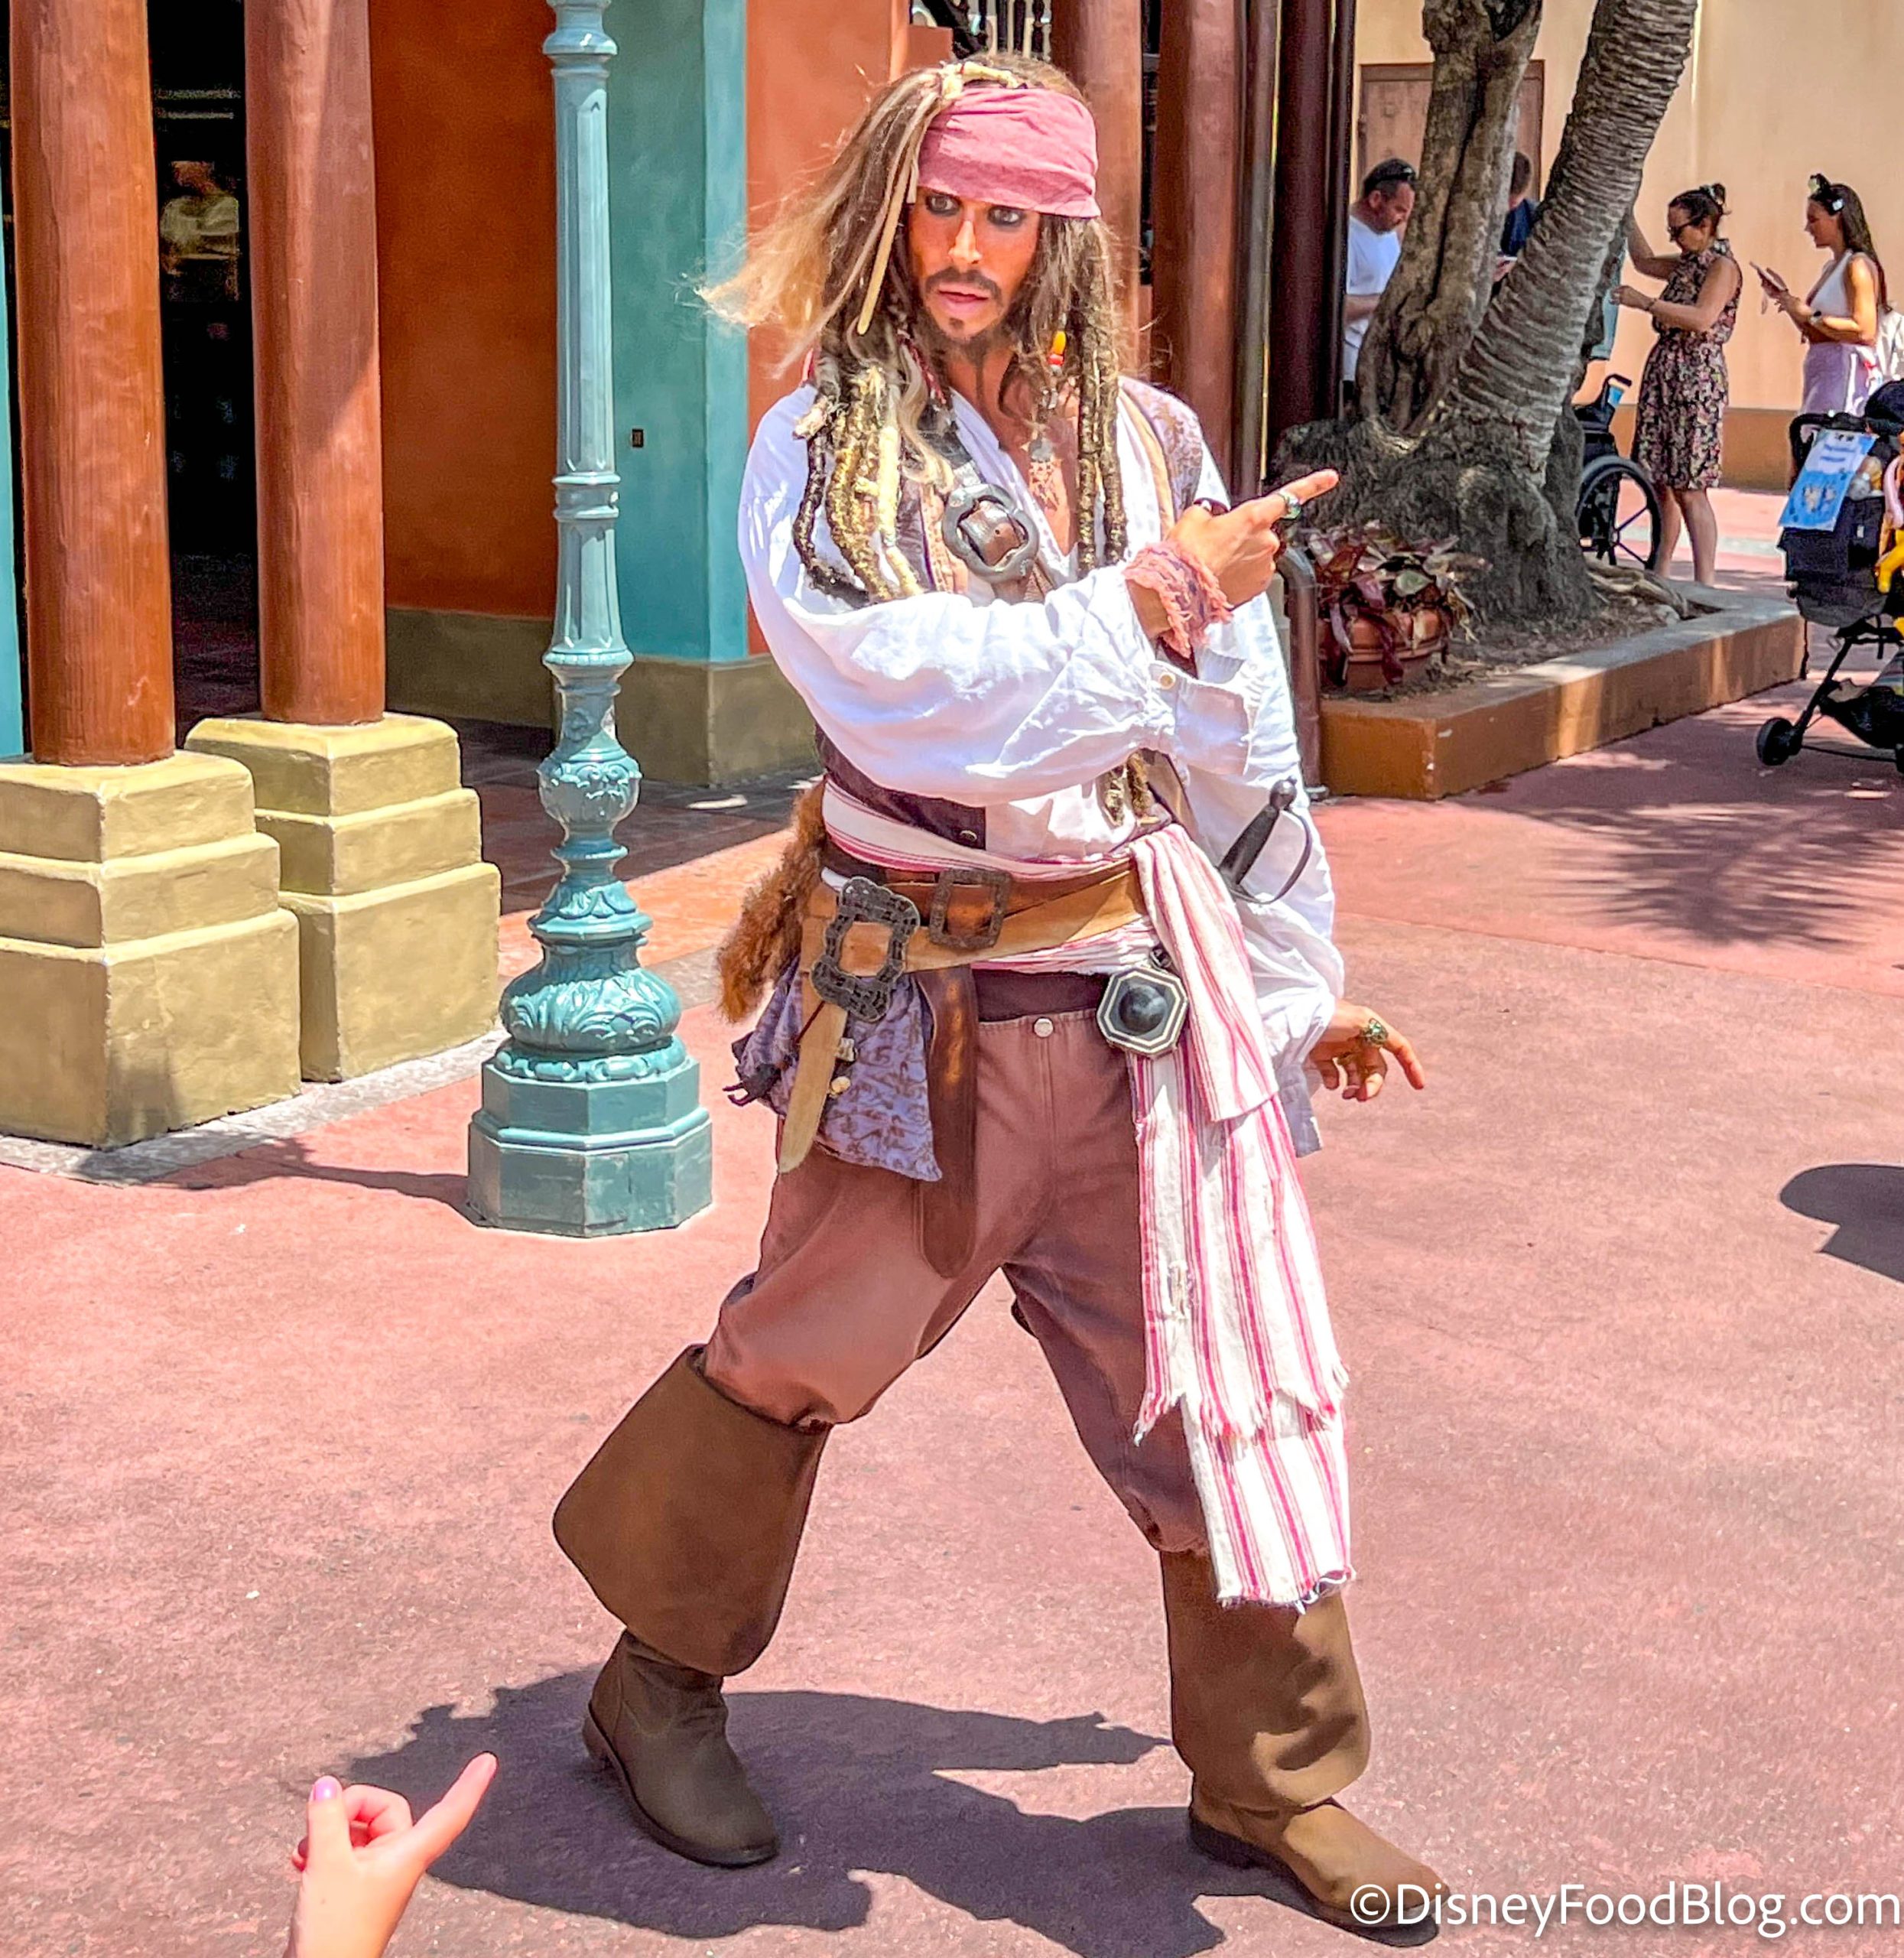 Disney head thought Jack Sparrow ruined Pirates of the Caribbean, says  Johnny Depp, Johnny Depp